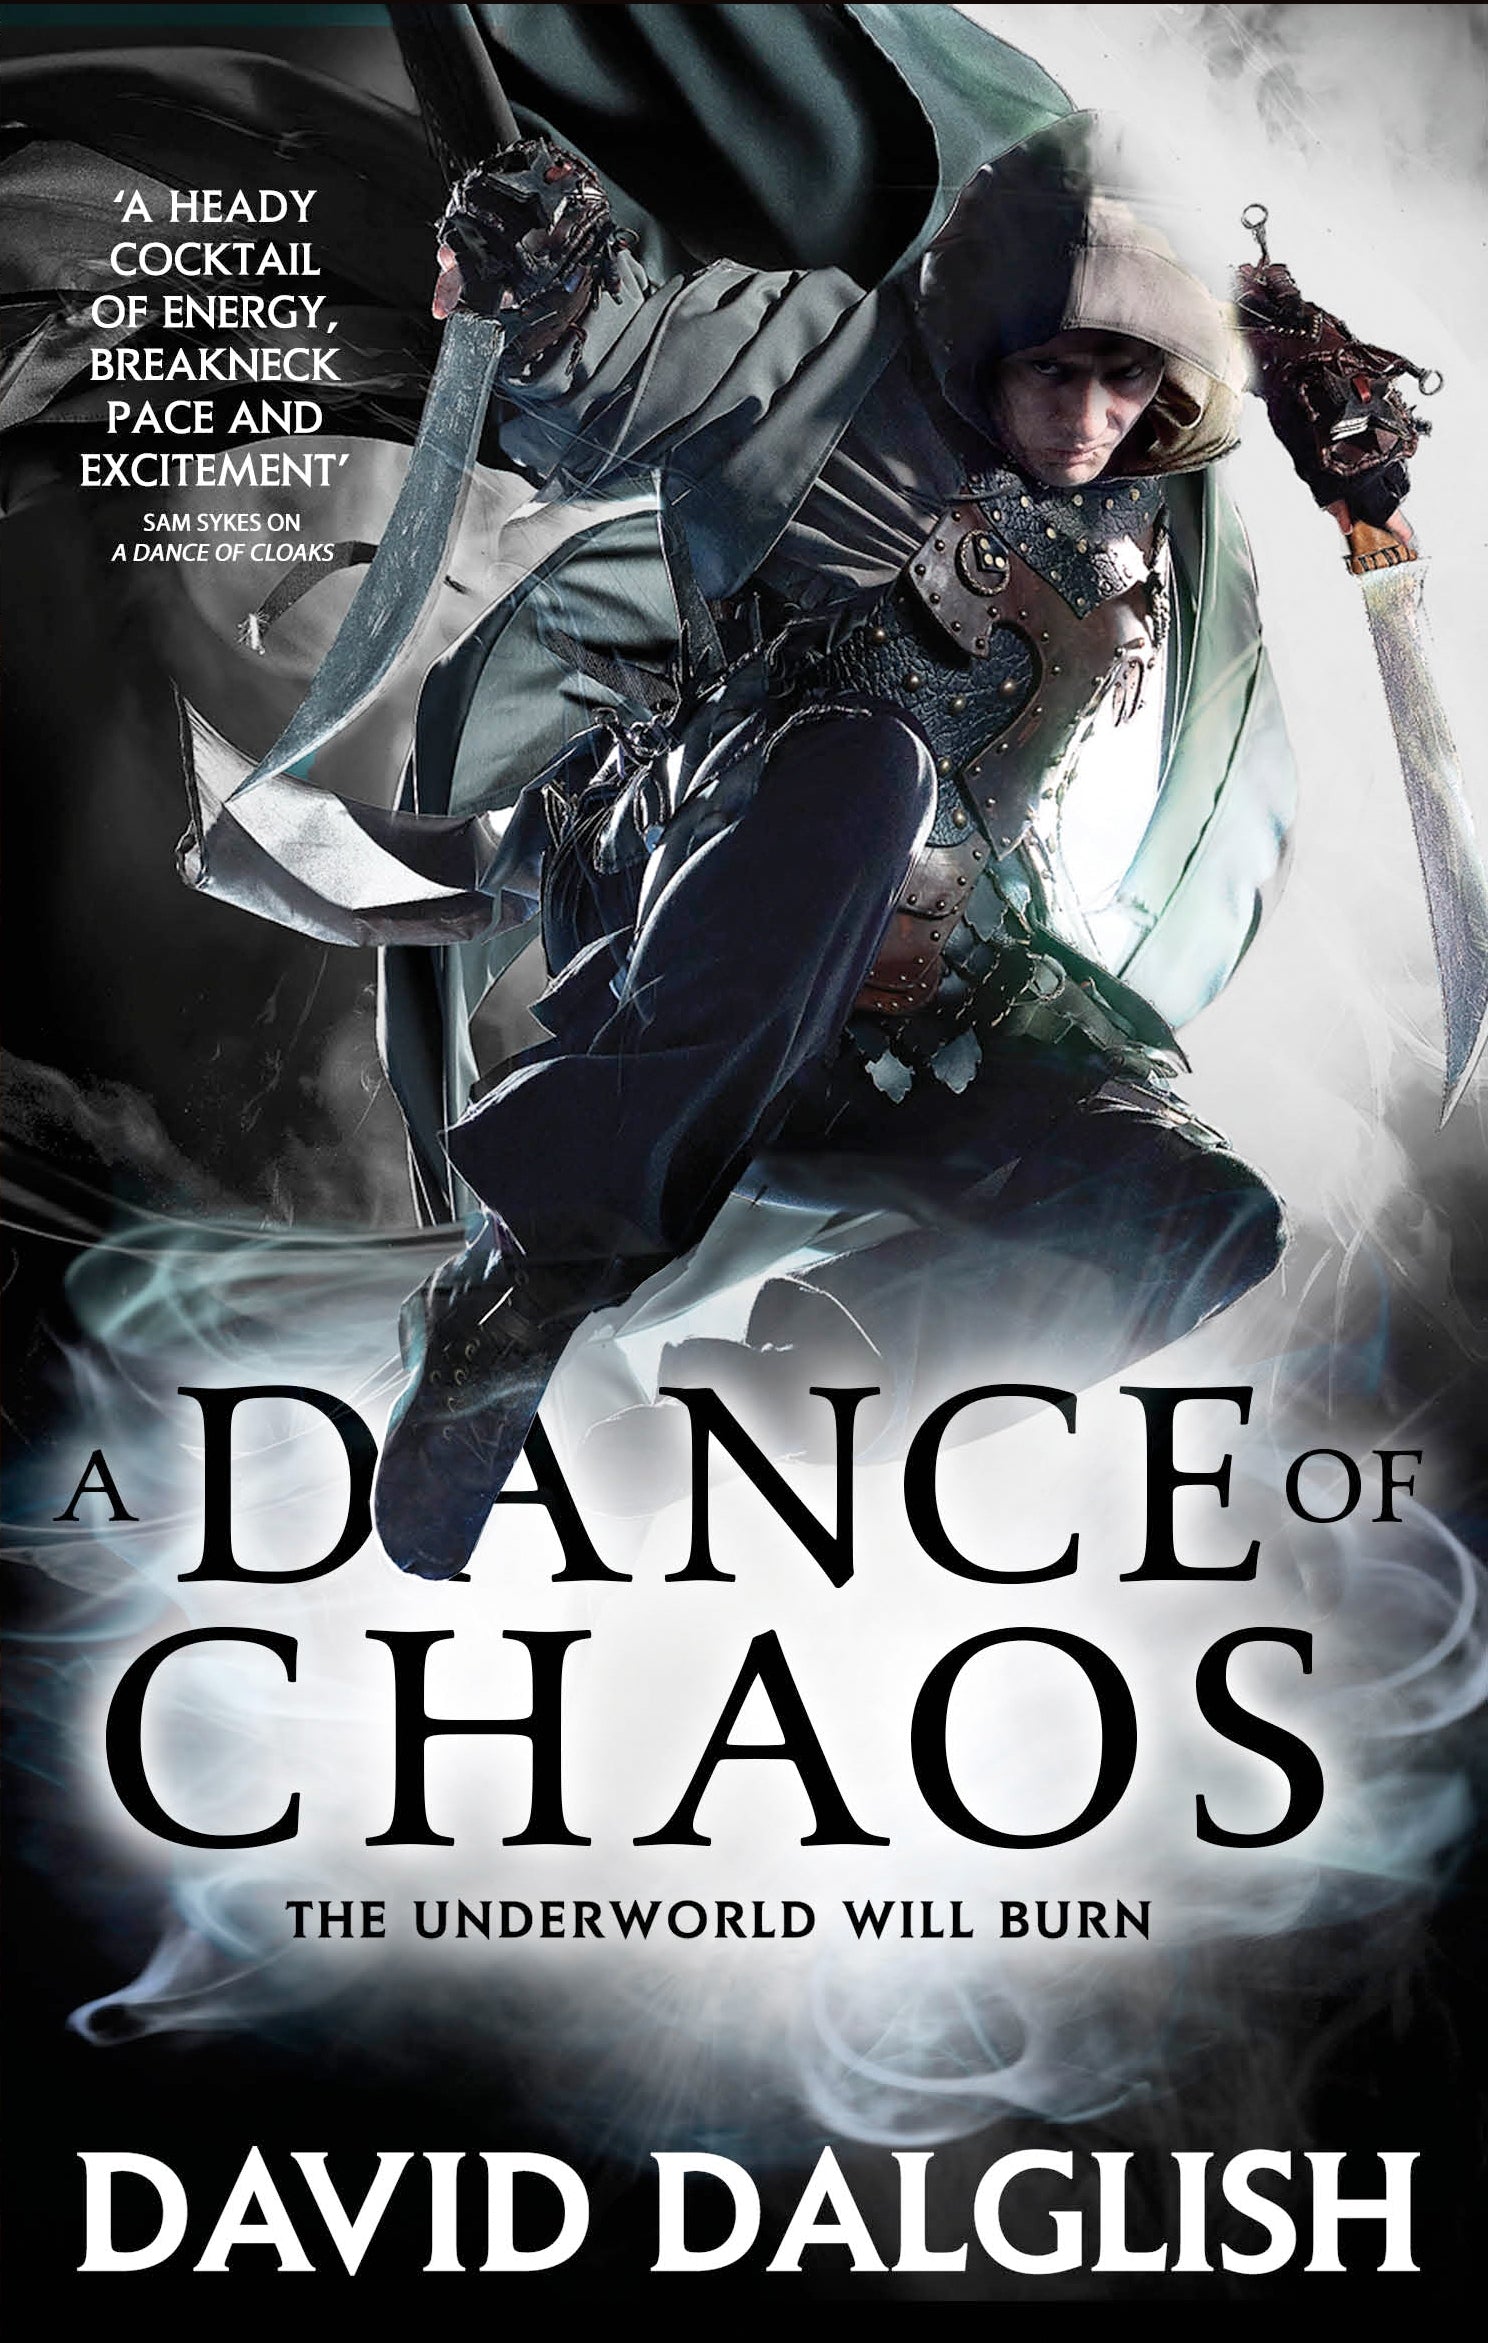 A Dance of Chaos by David Dalglish